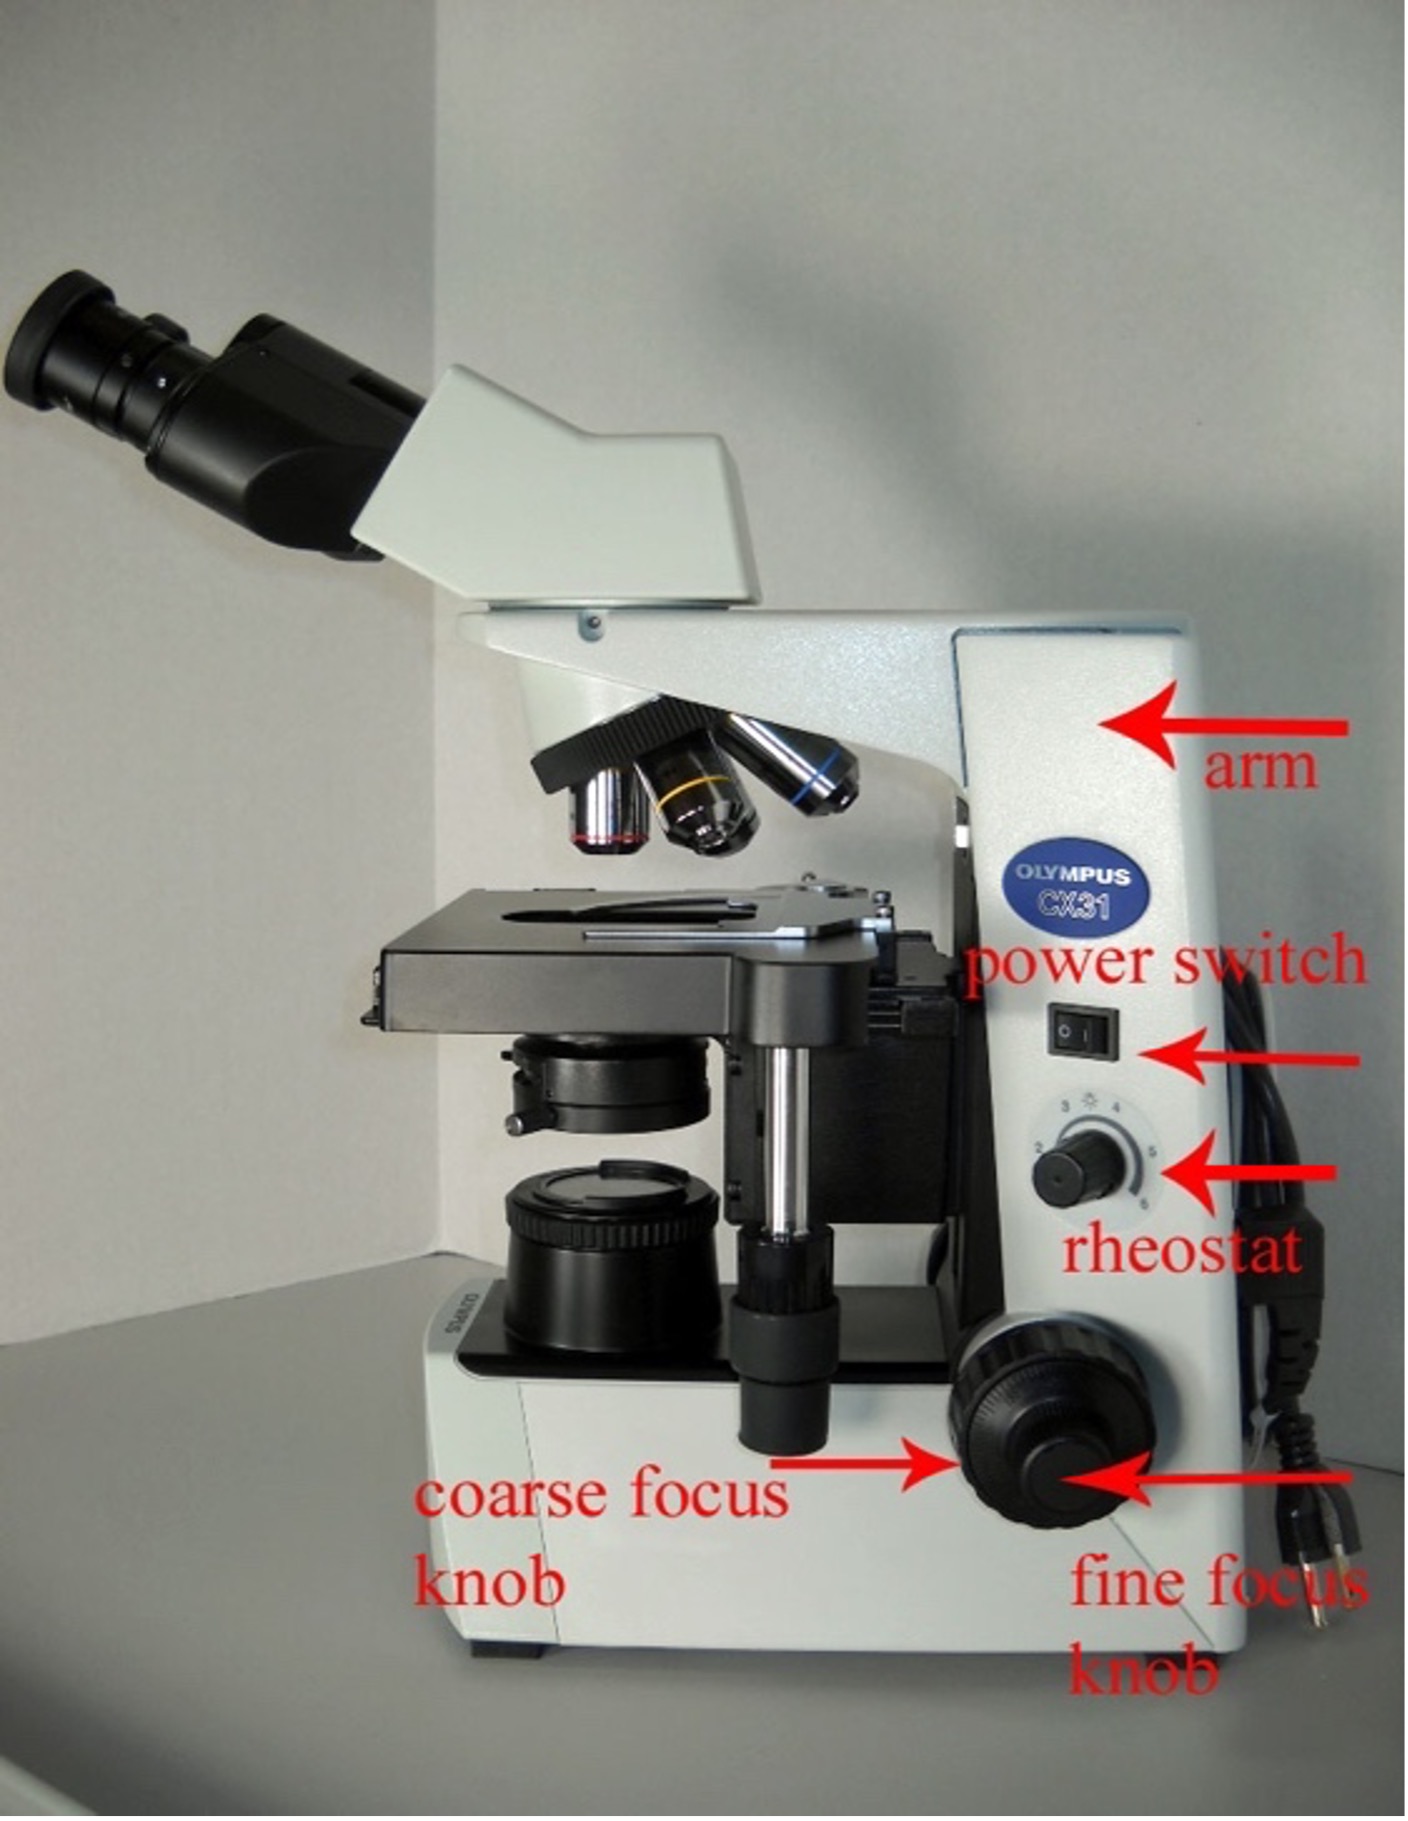 condenser adjustment knob microscope